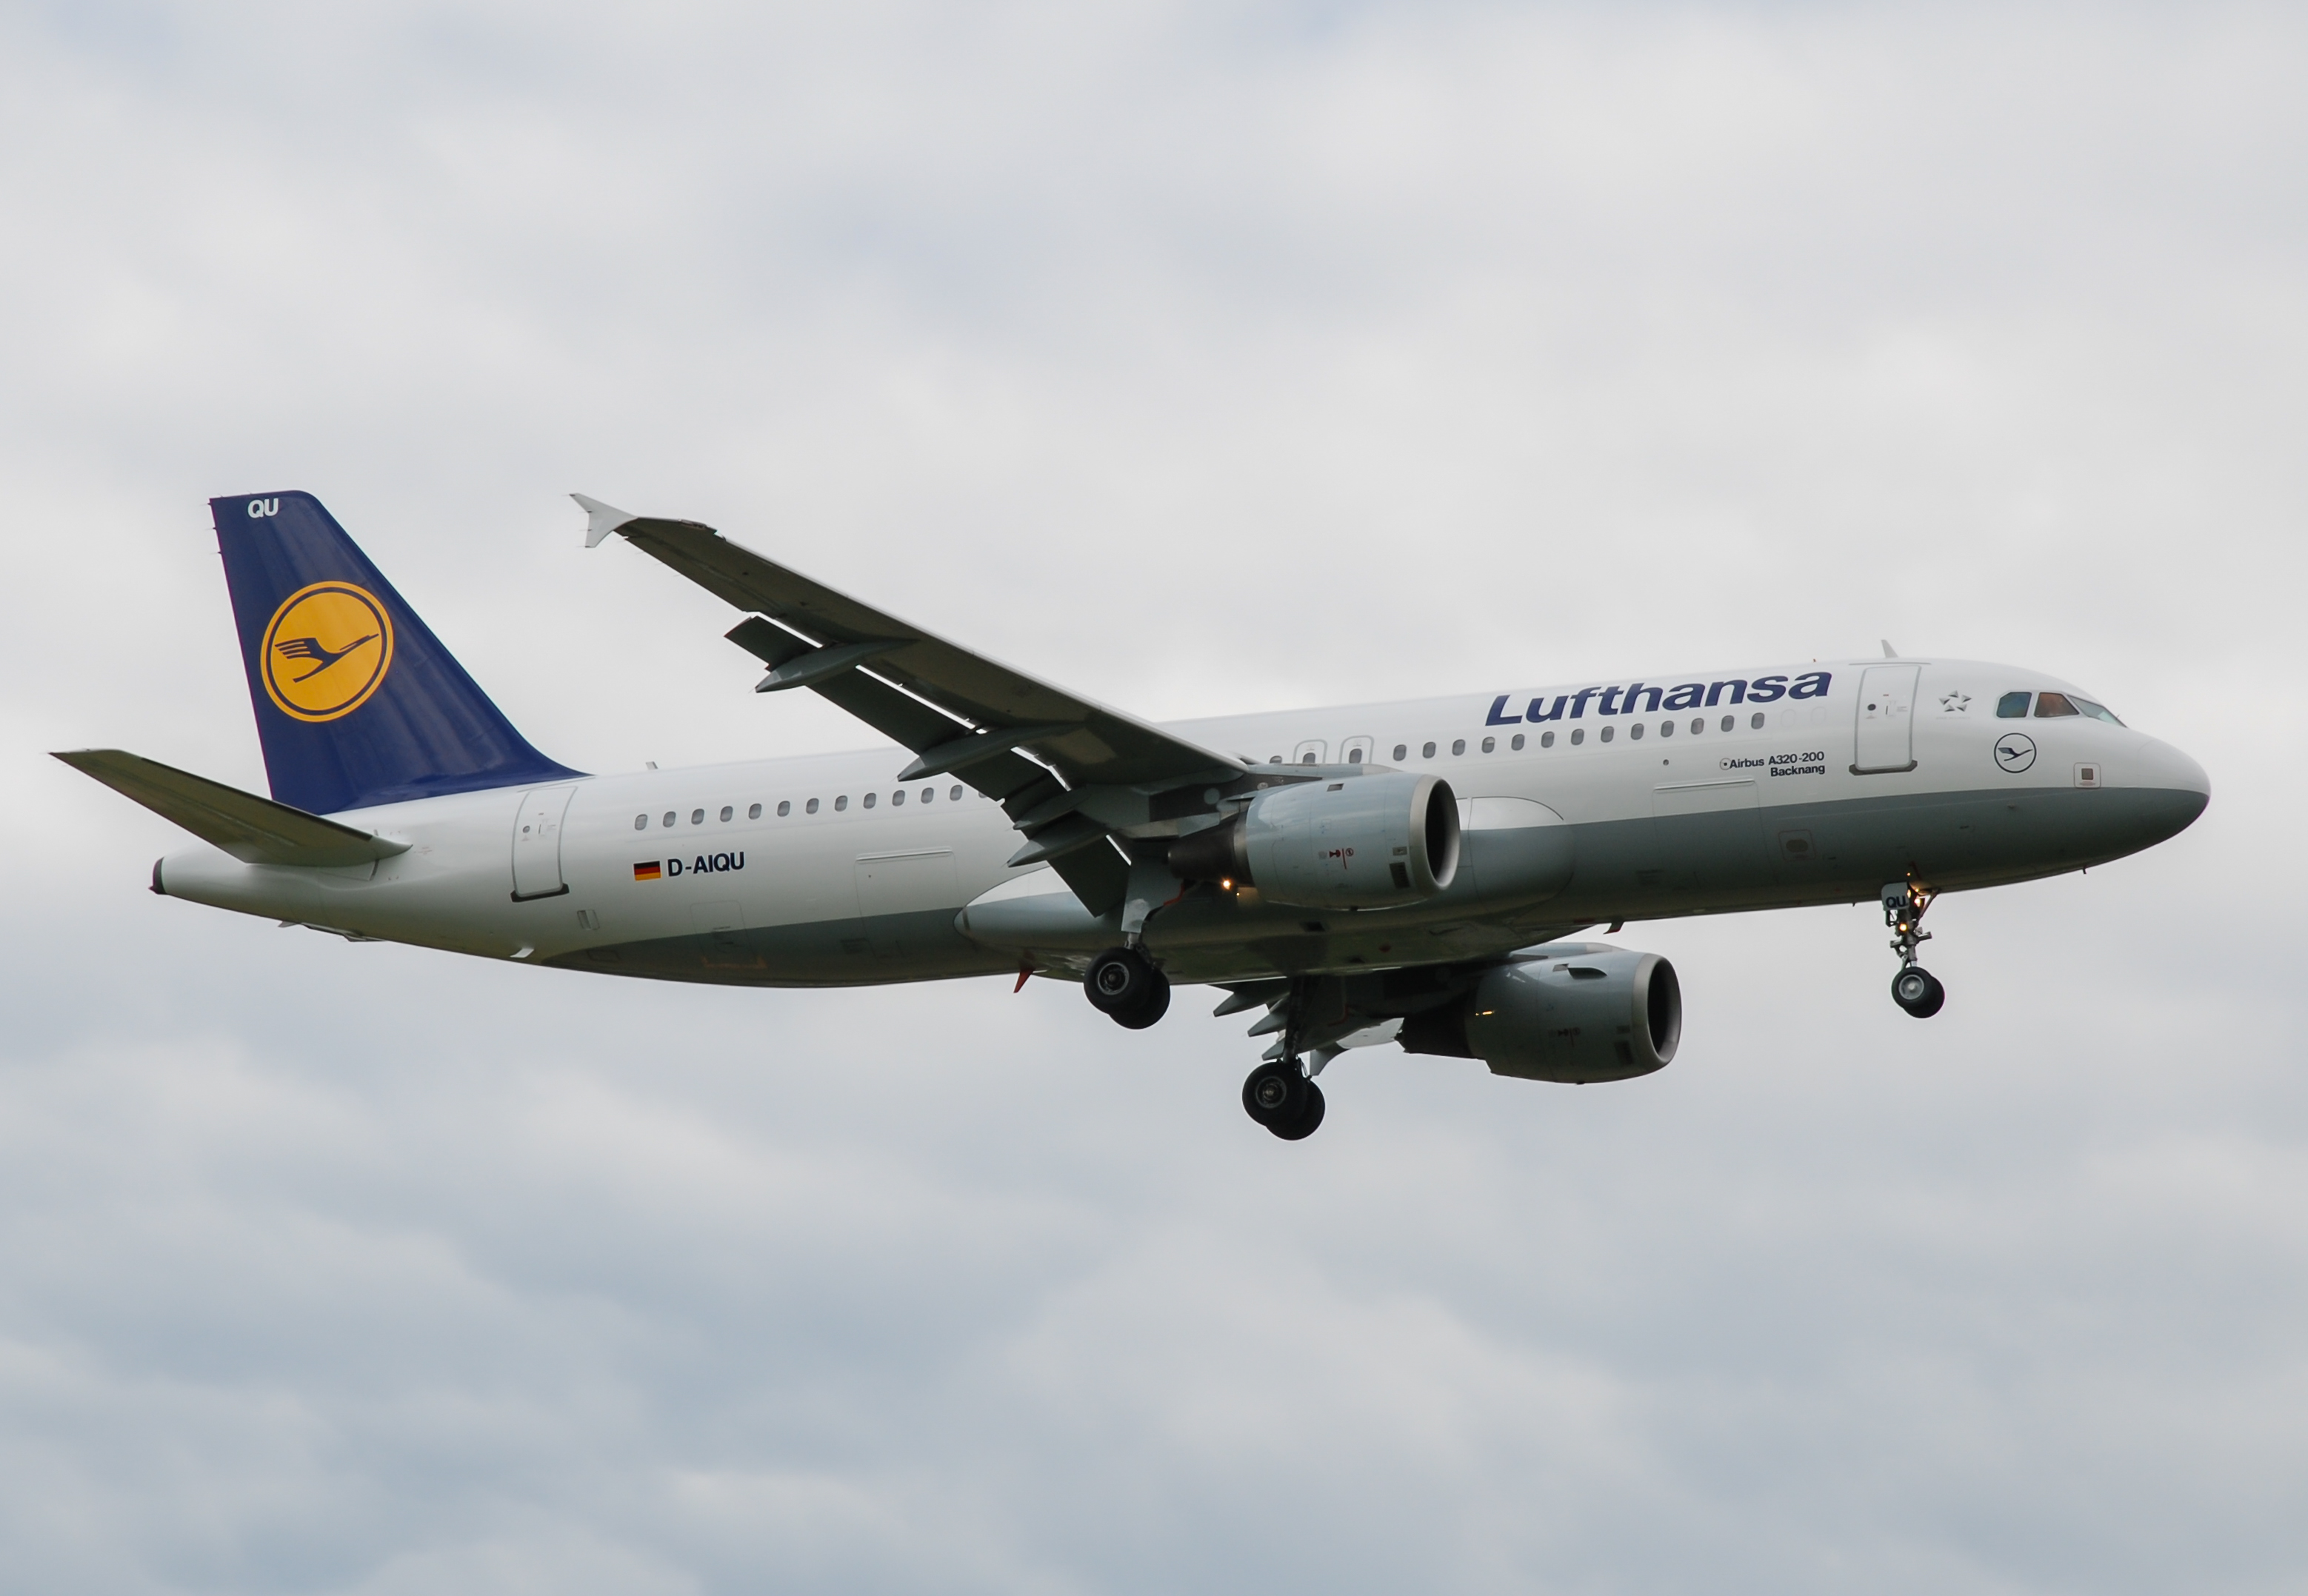 D-AIQU/DAIQU Lufthansa Airbus A320 Airframe Information - AVSpotters.com